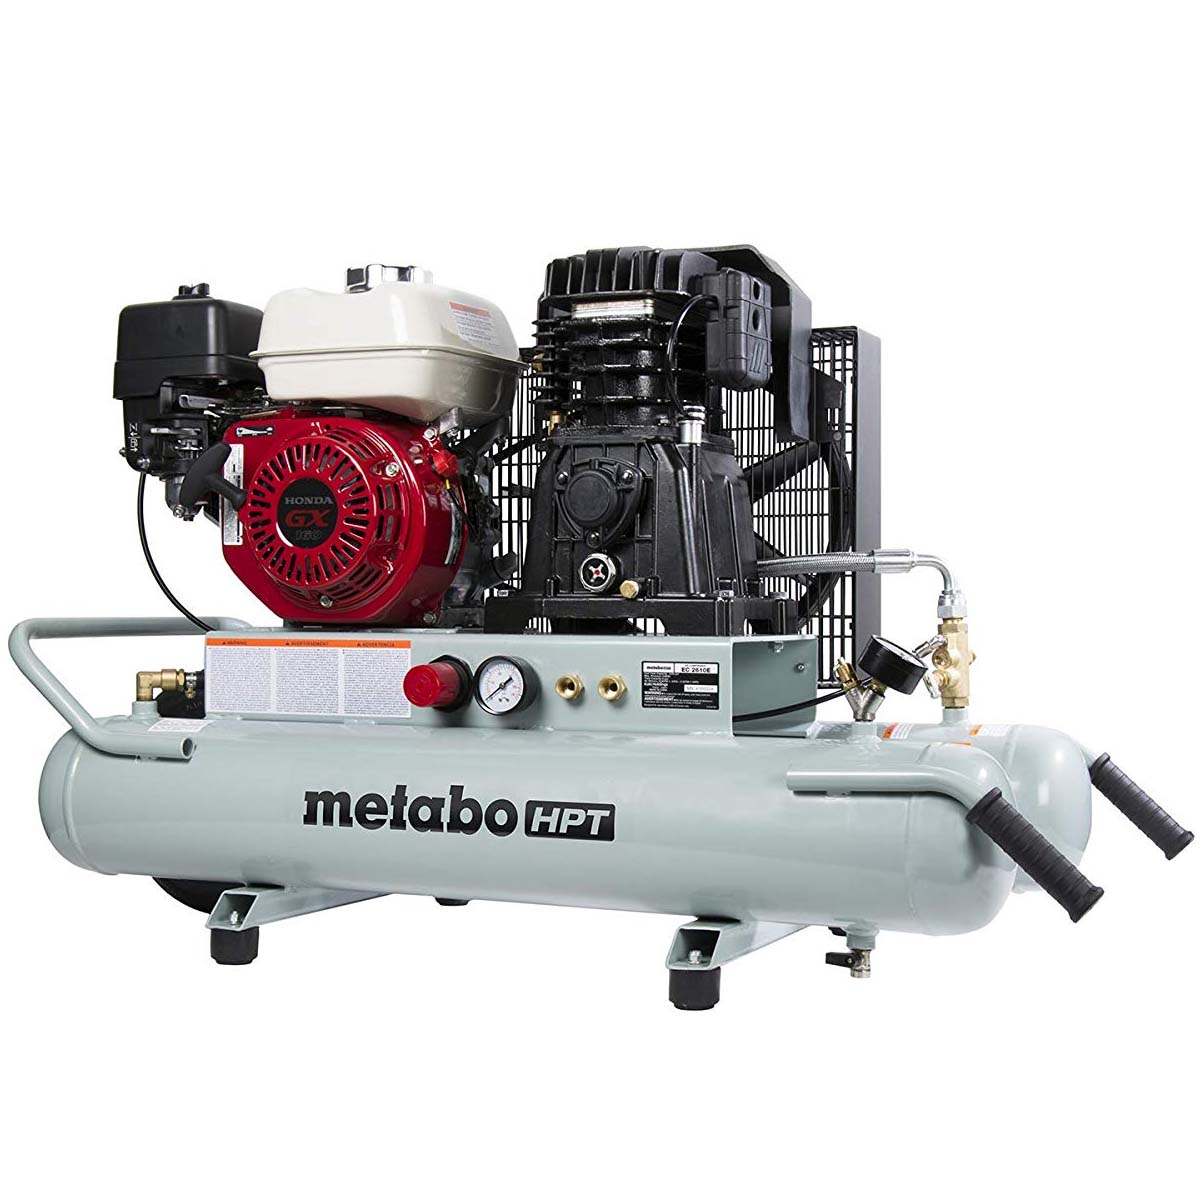 Metabo HPT 8-Gallon Gas Powered Wheelbarrow Air Compressor Helpful 2